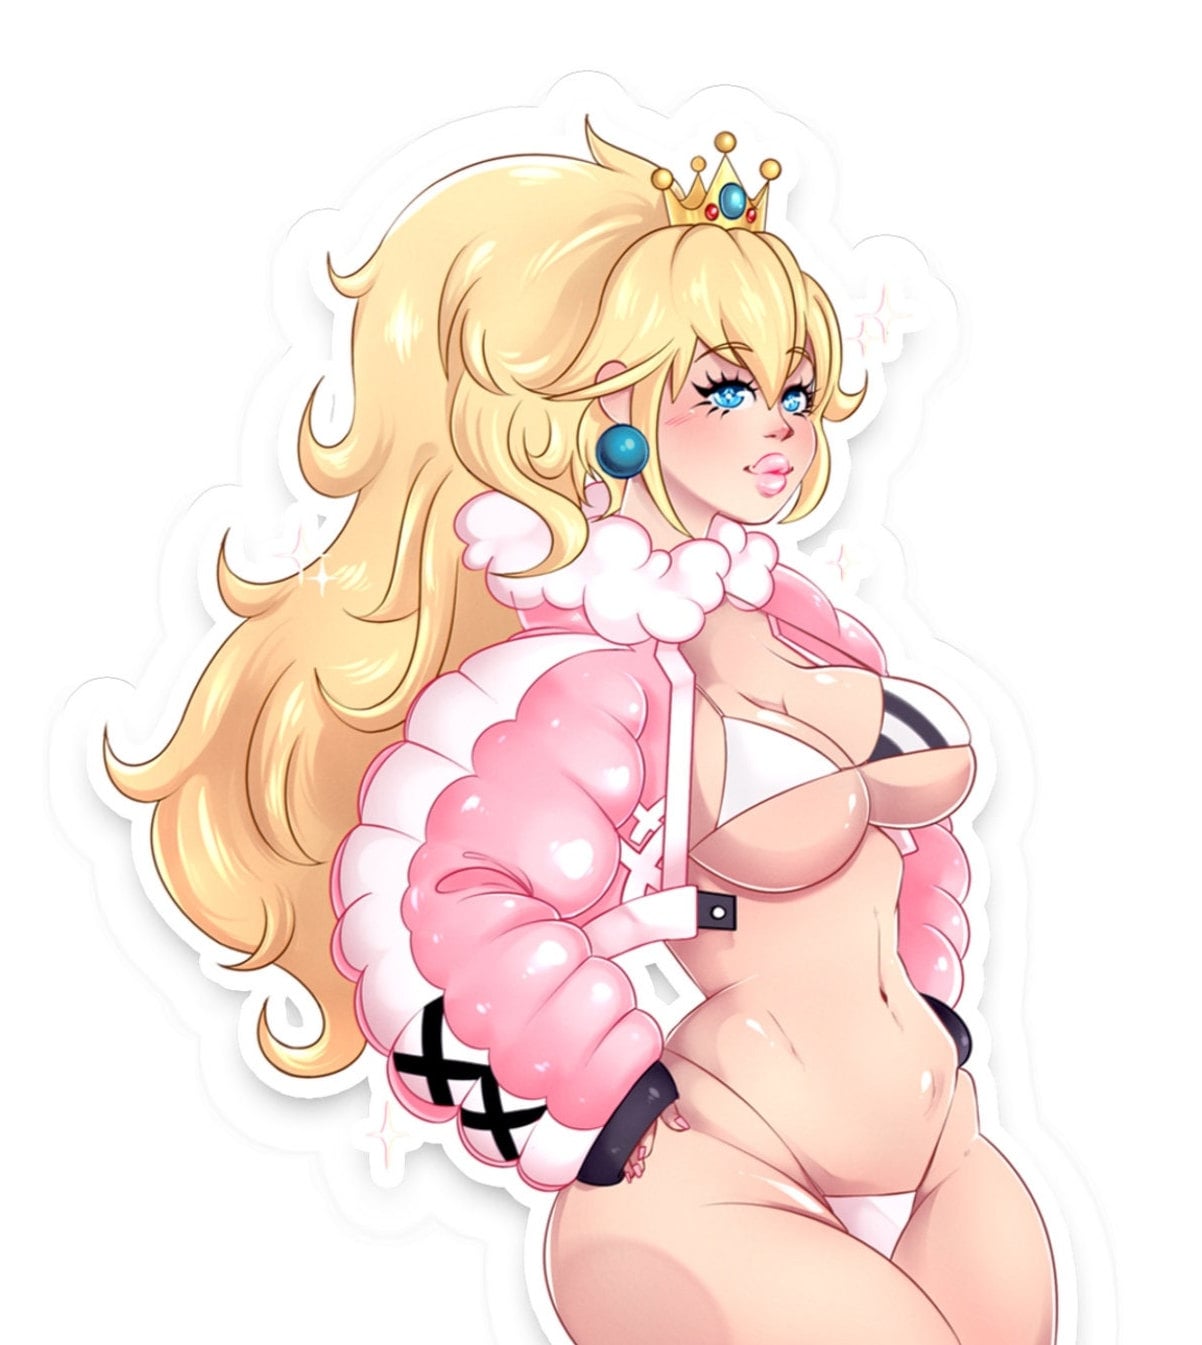 Sexy Princess Peach of friends